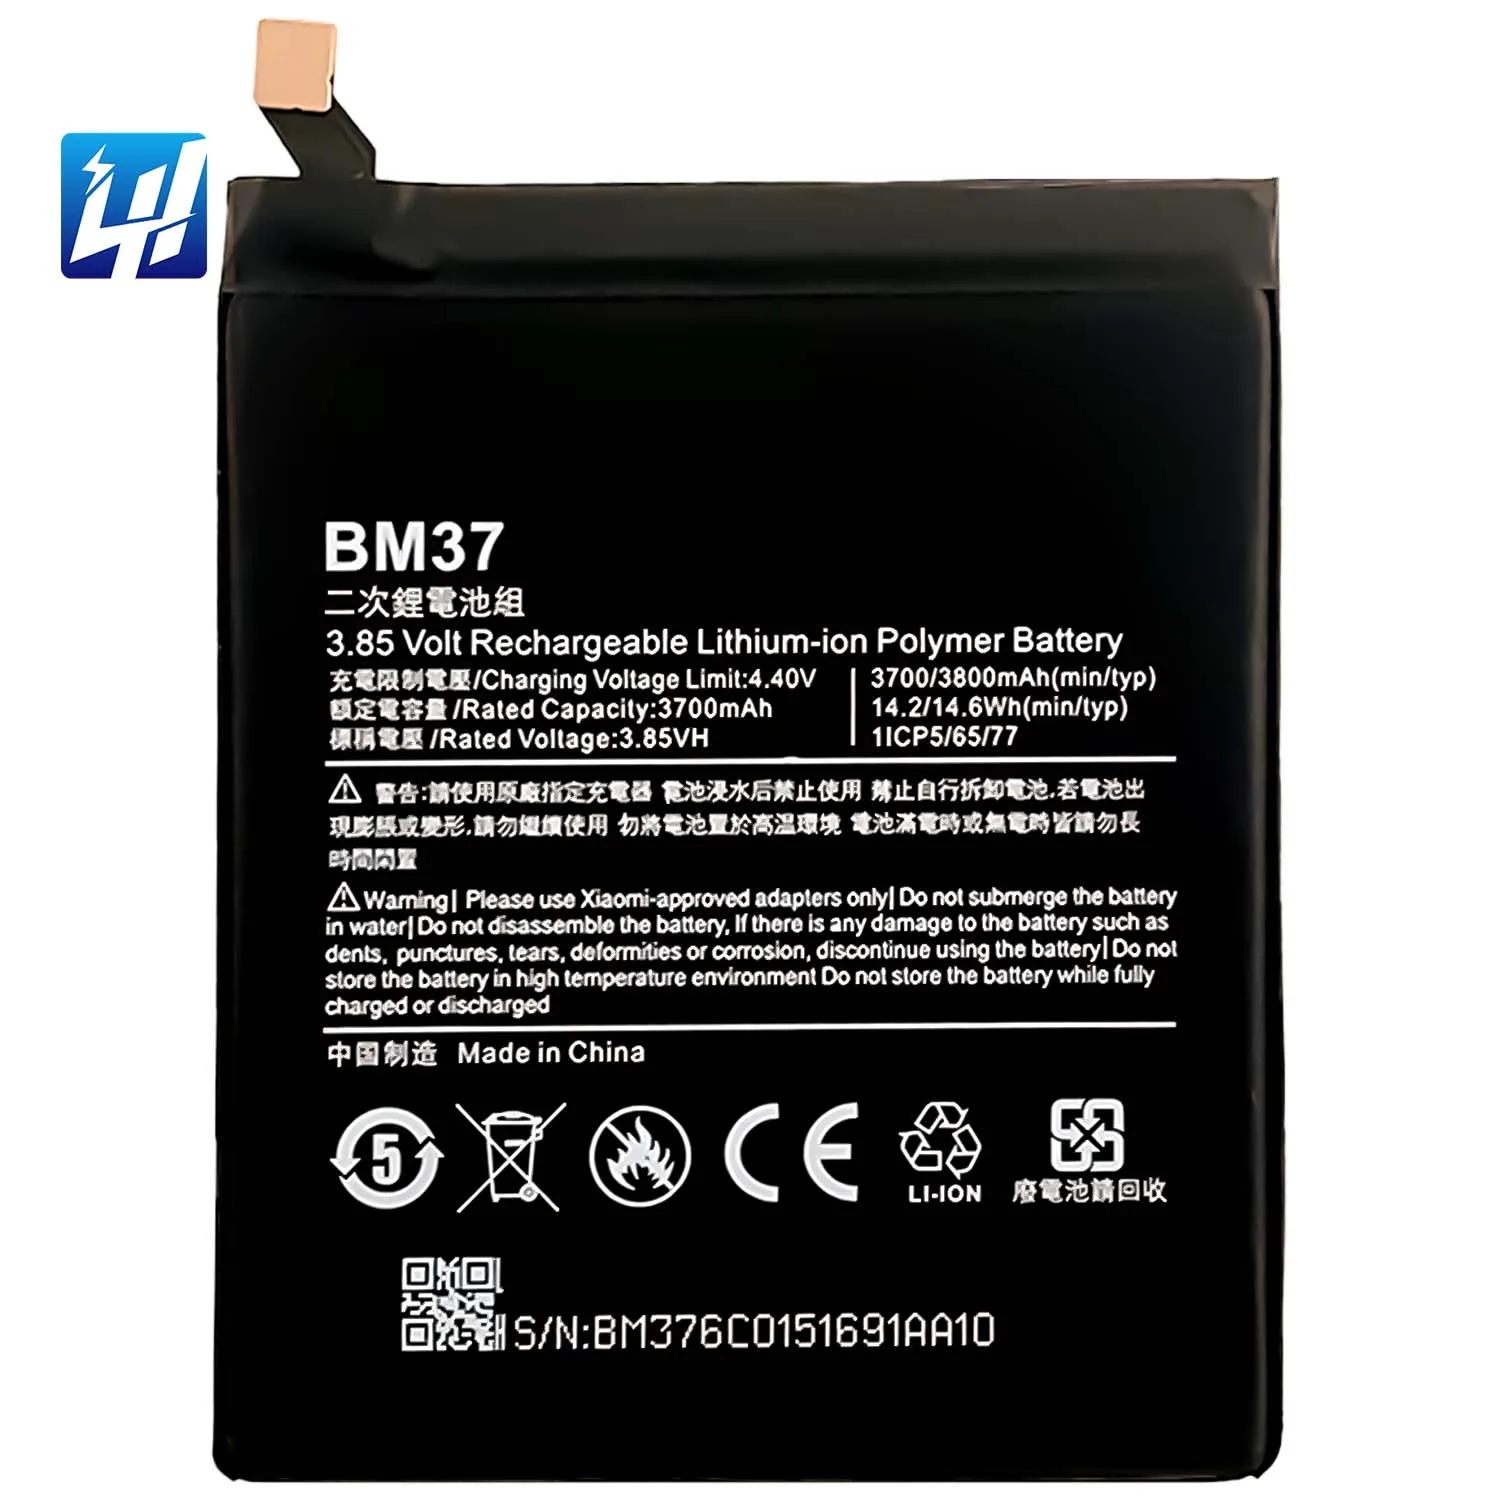 

OEM BM37 hight capacity battery for Xiao mi 5s plus